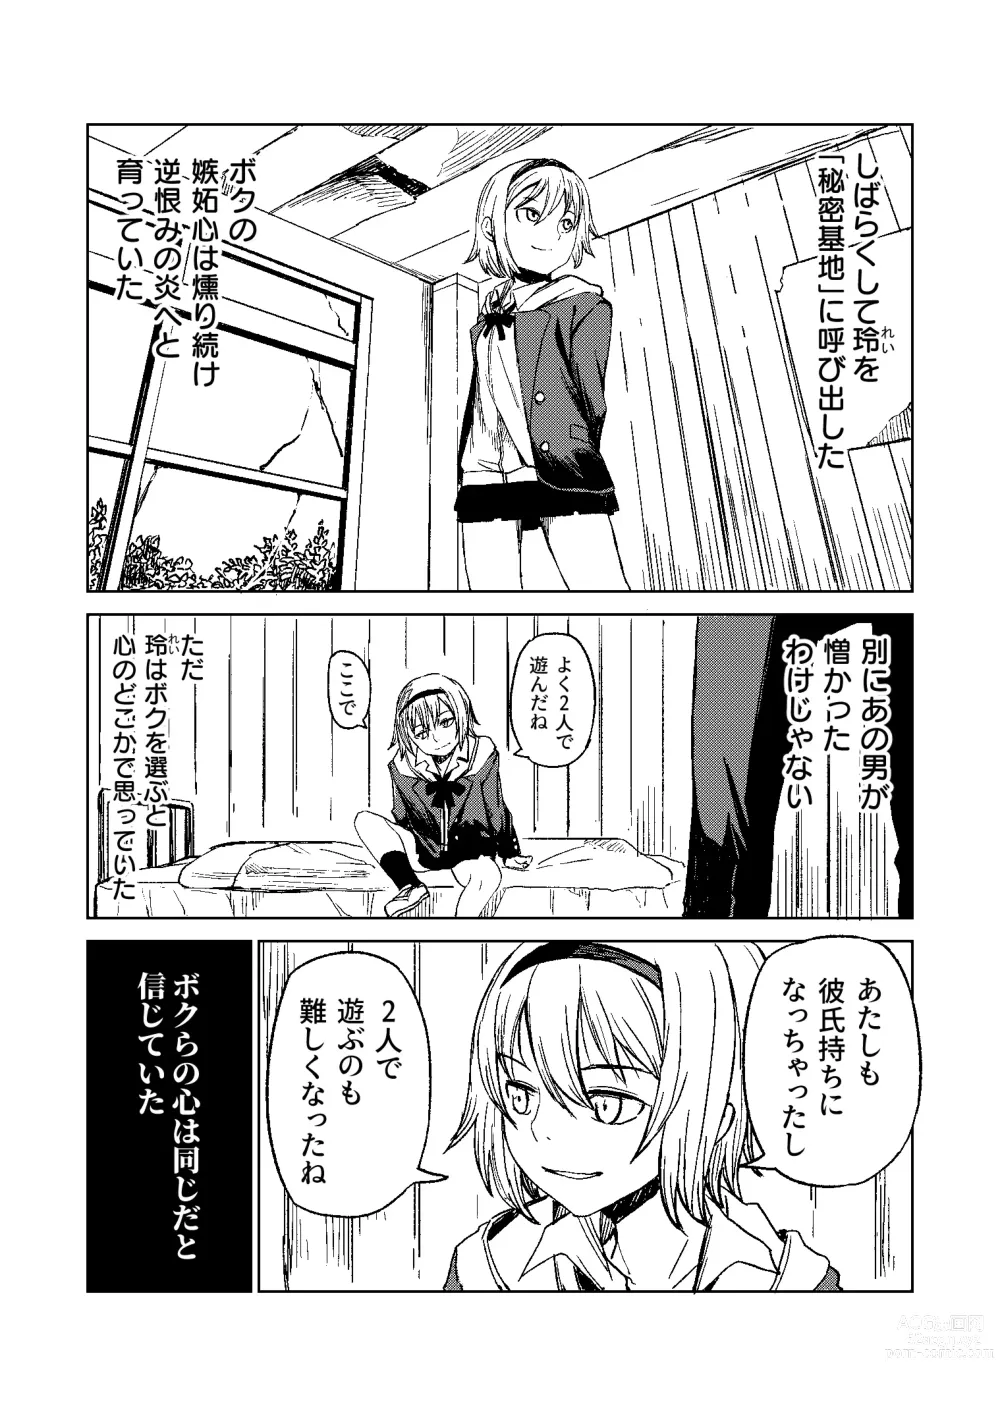 Page 4 of doujinshi FRIEND